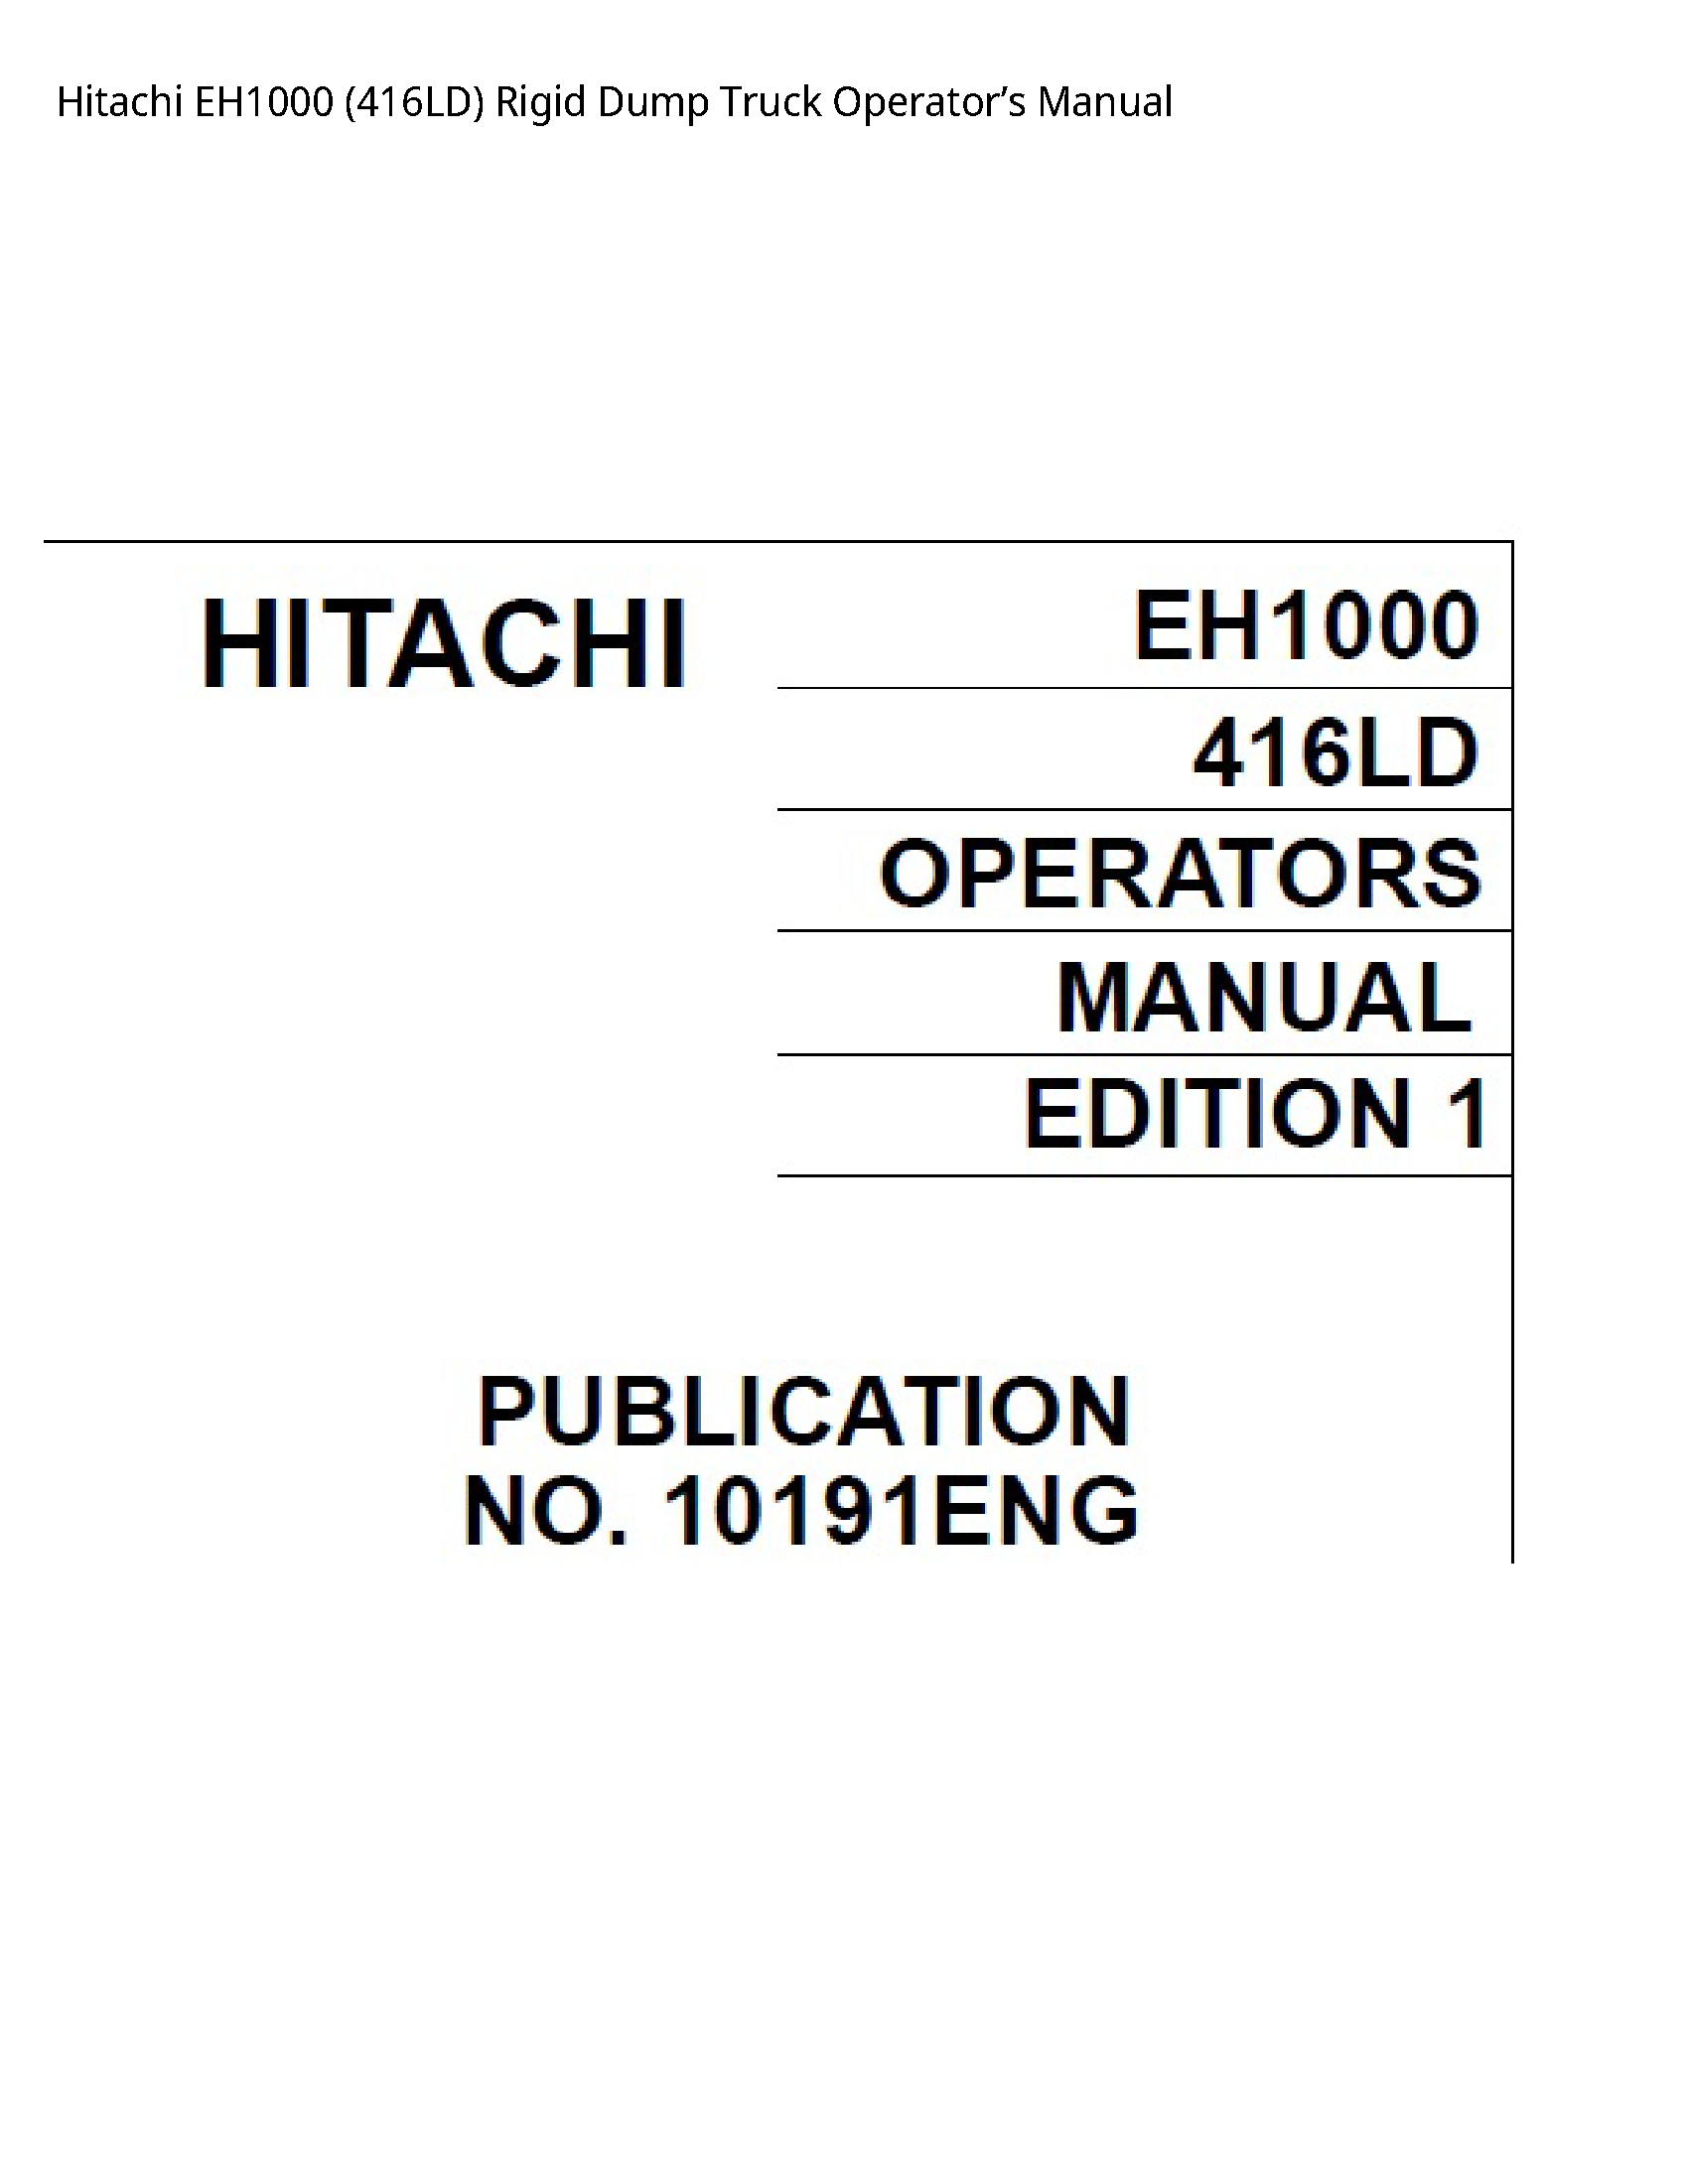 Hitachi EH1000 Rigid Dump Truck Operator’s manual